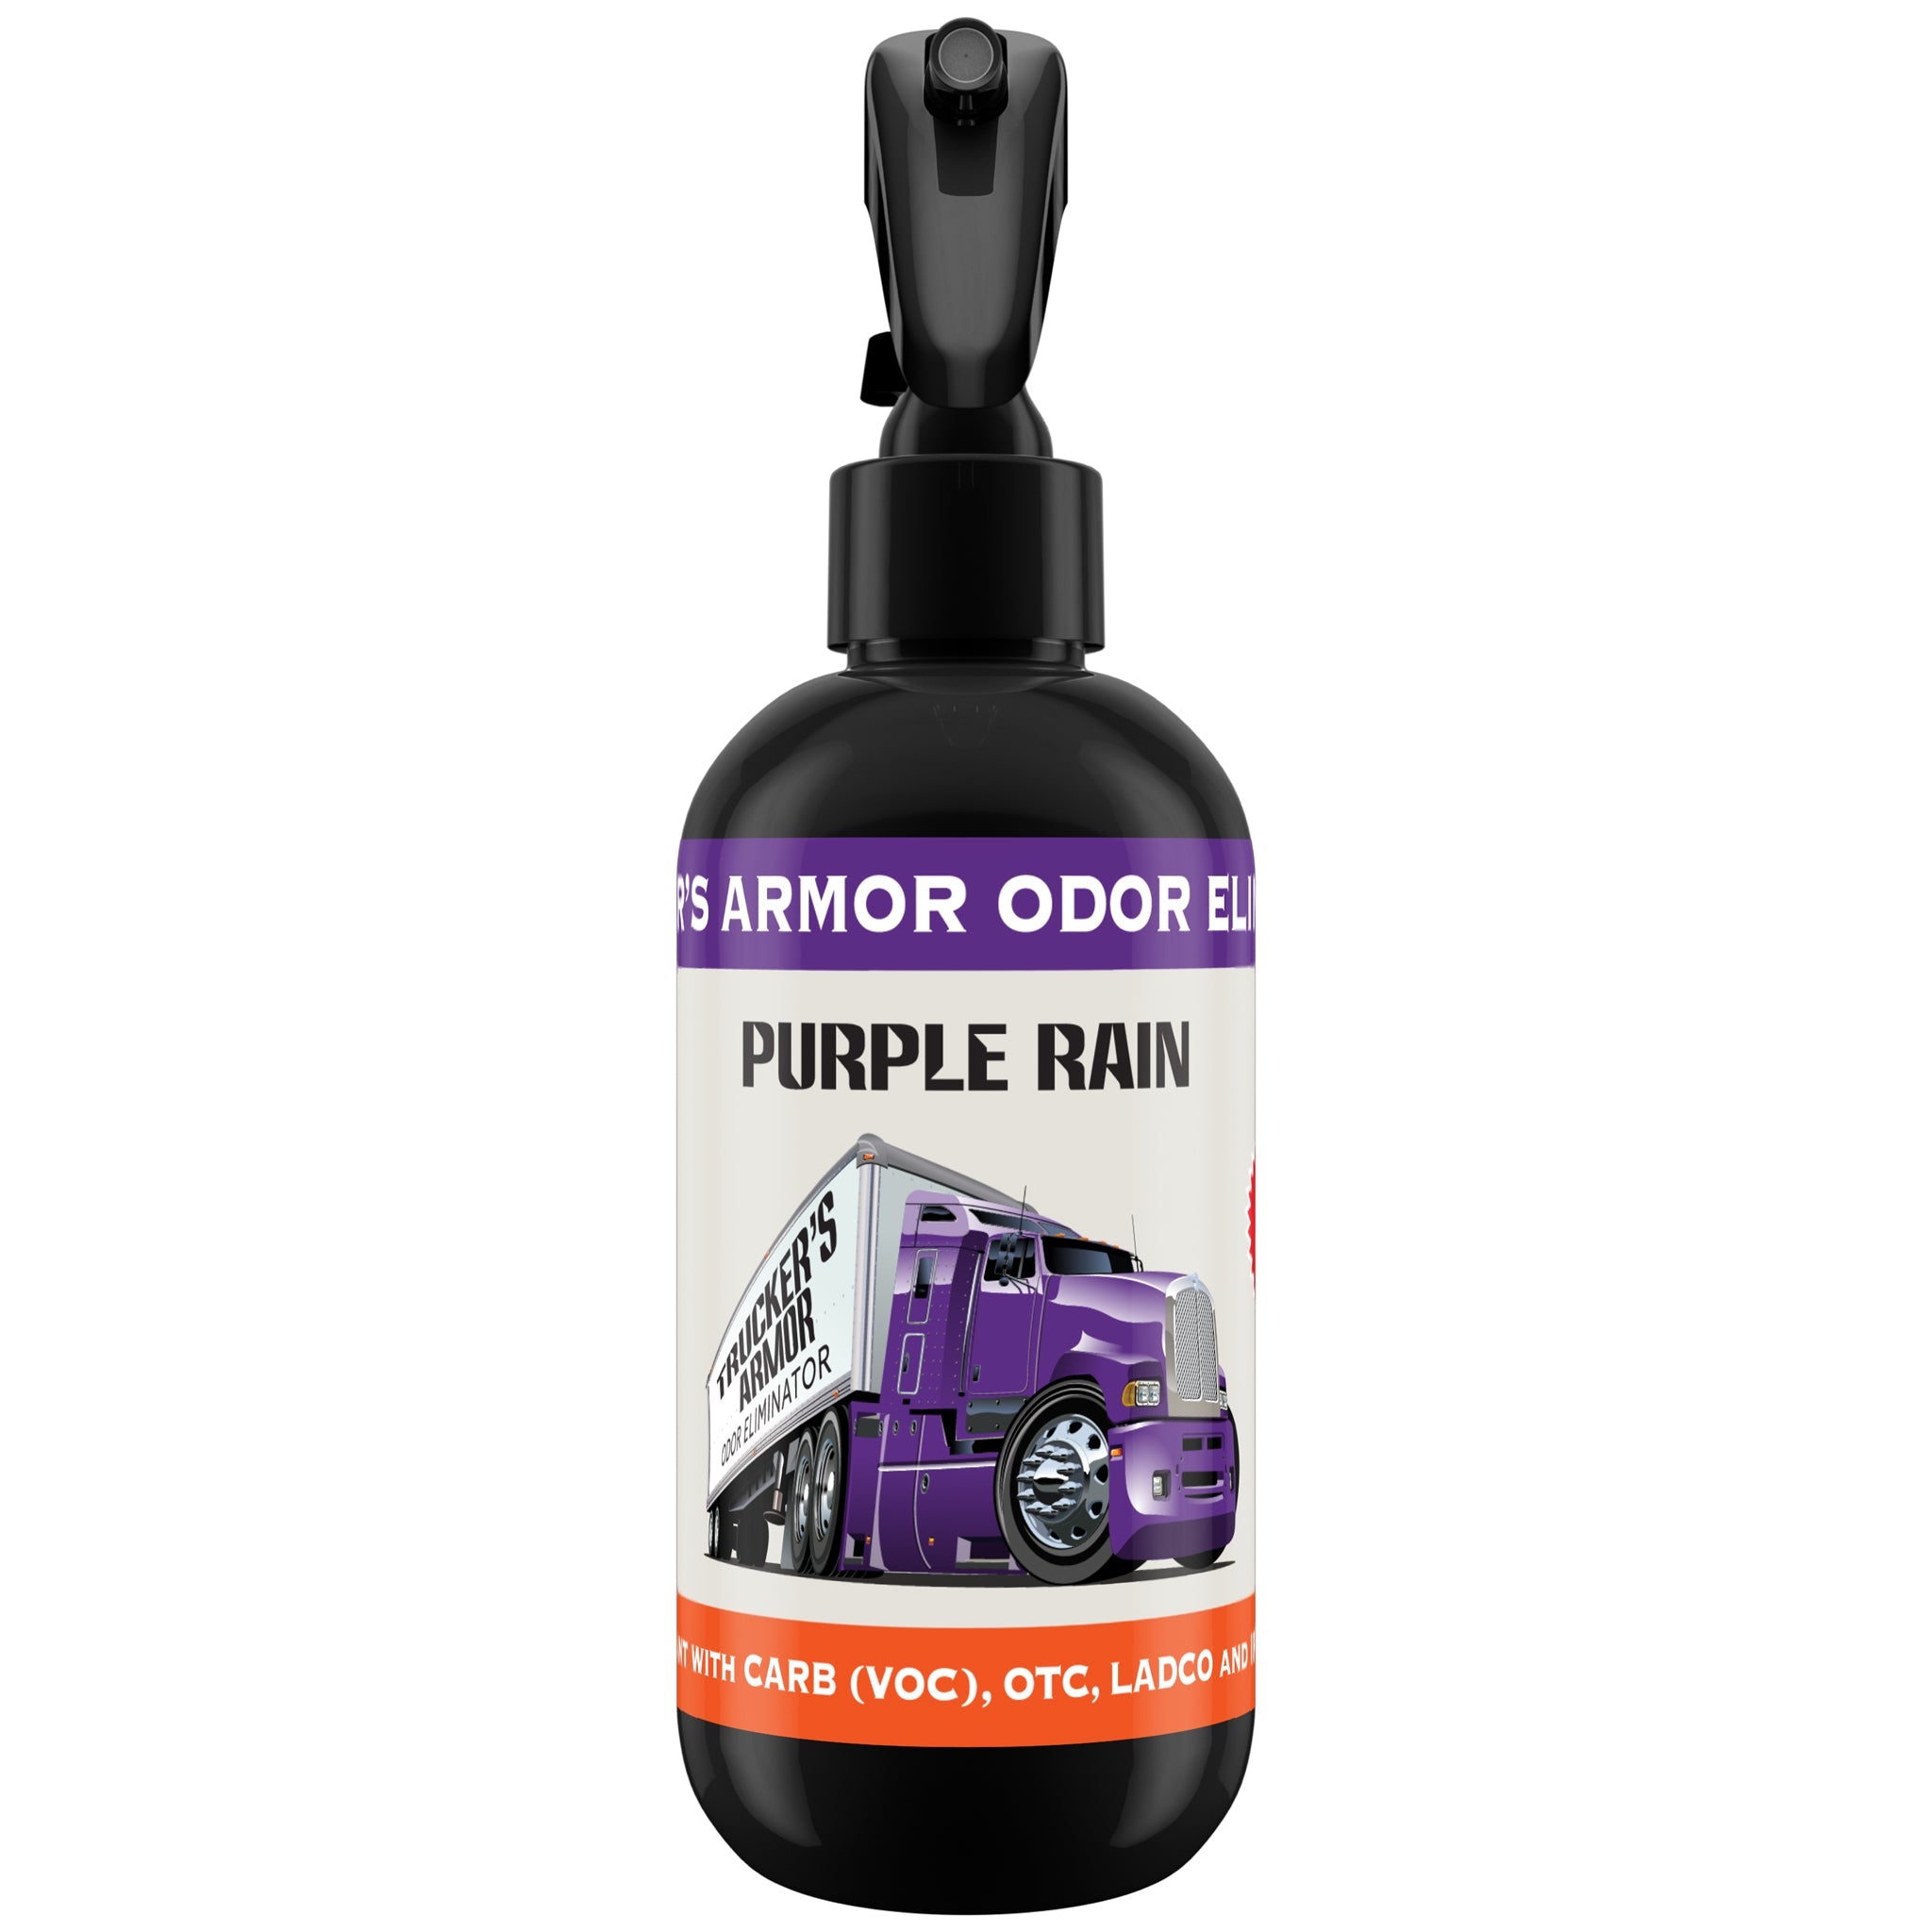 Trucker's Armor Odor Eliminator - Purple Rain Scent